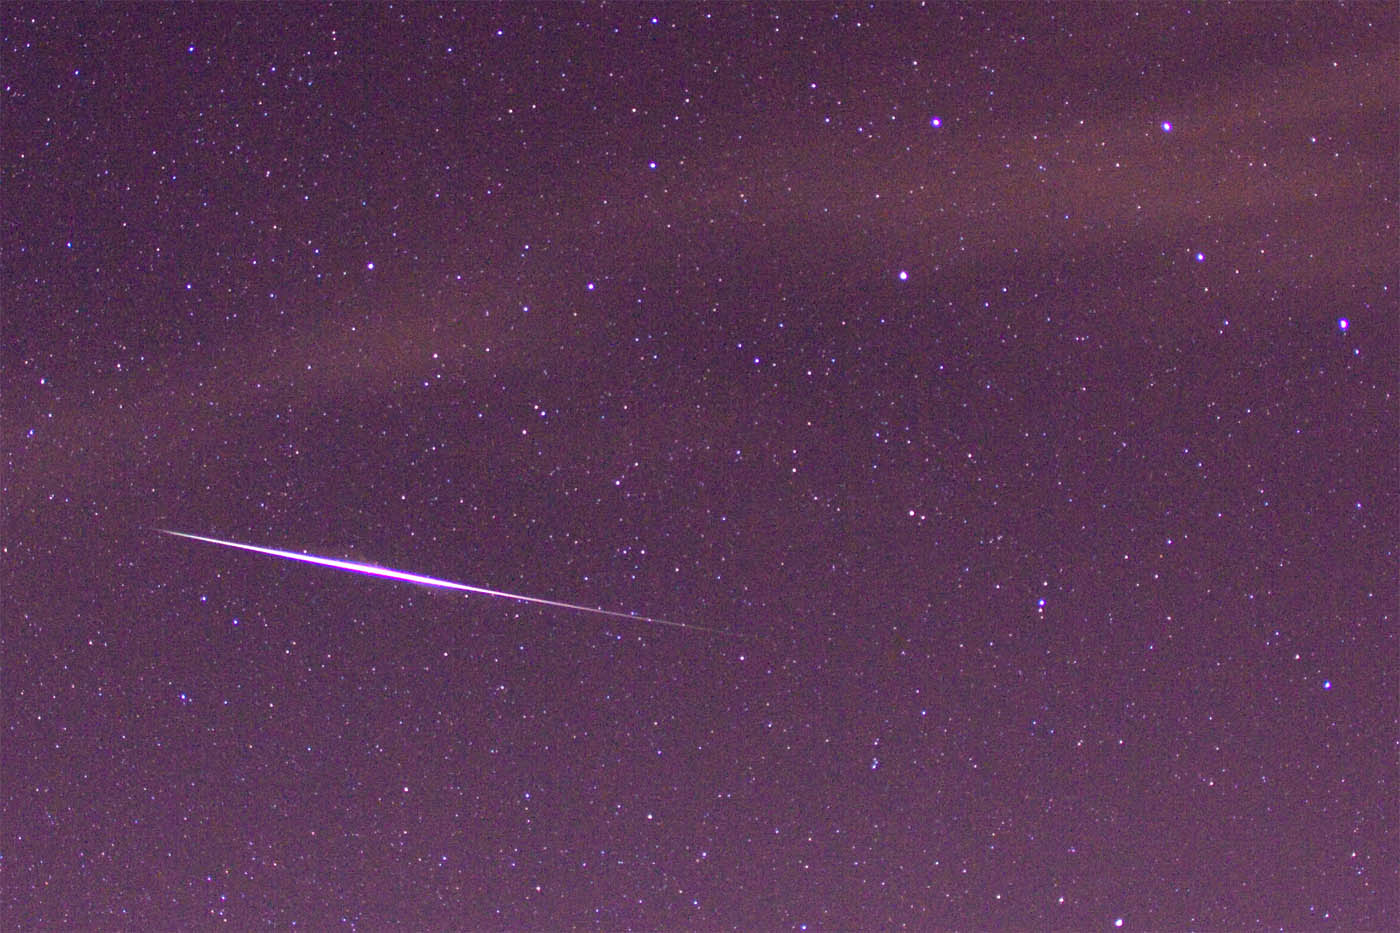 2011 Quadrantids Meteor Shower - Mike's Astro Photos